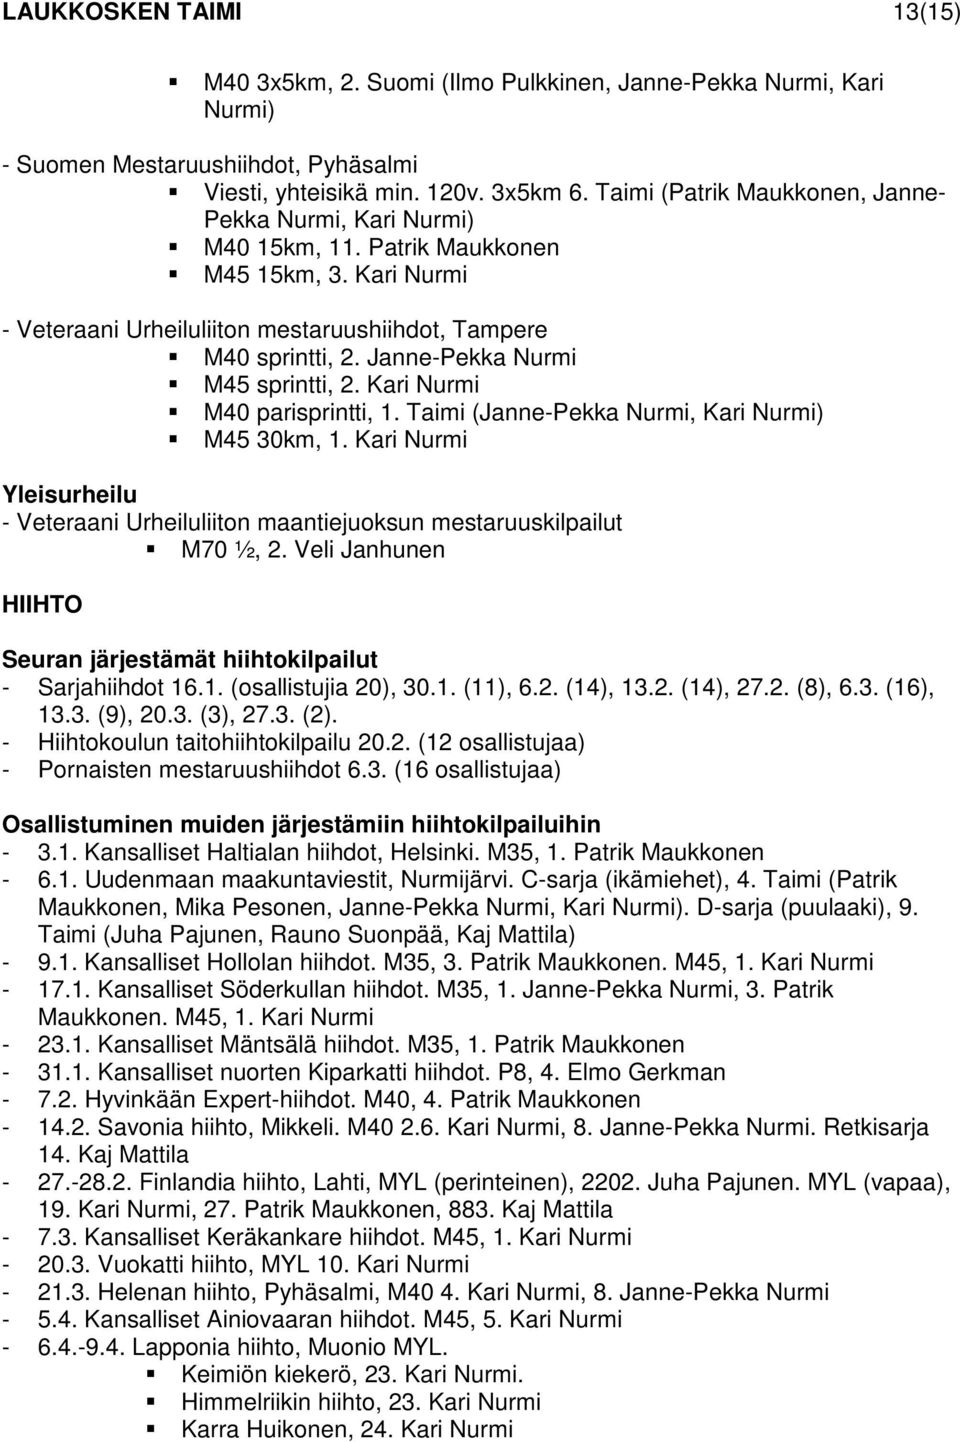 Janne-Pekka Nurmi M45 sprintti, 2. Kari Nurmi M40 parisprintti, 1. Taimi (Janne-Pekka Nurmi, Kari Nurmi) M45 30km, 1.